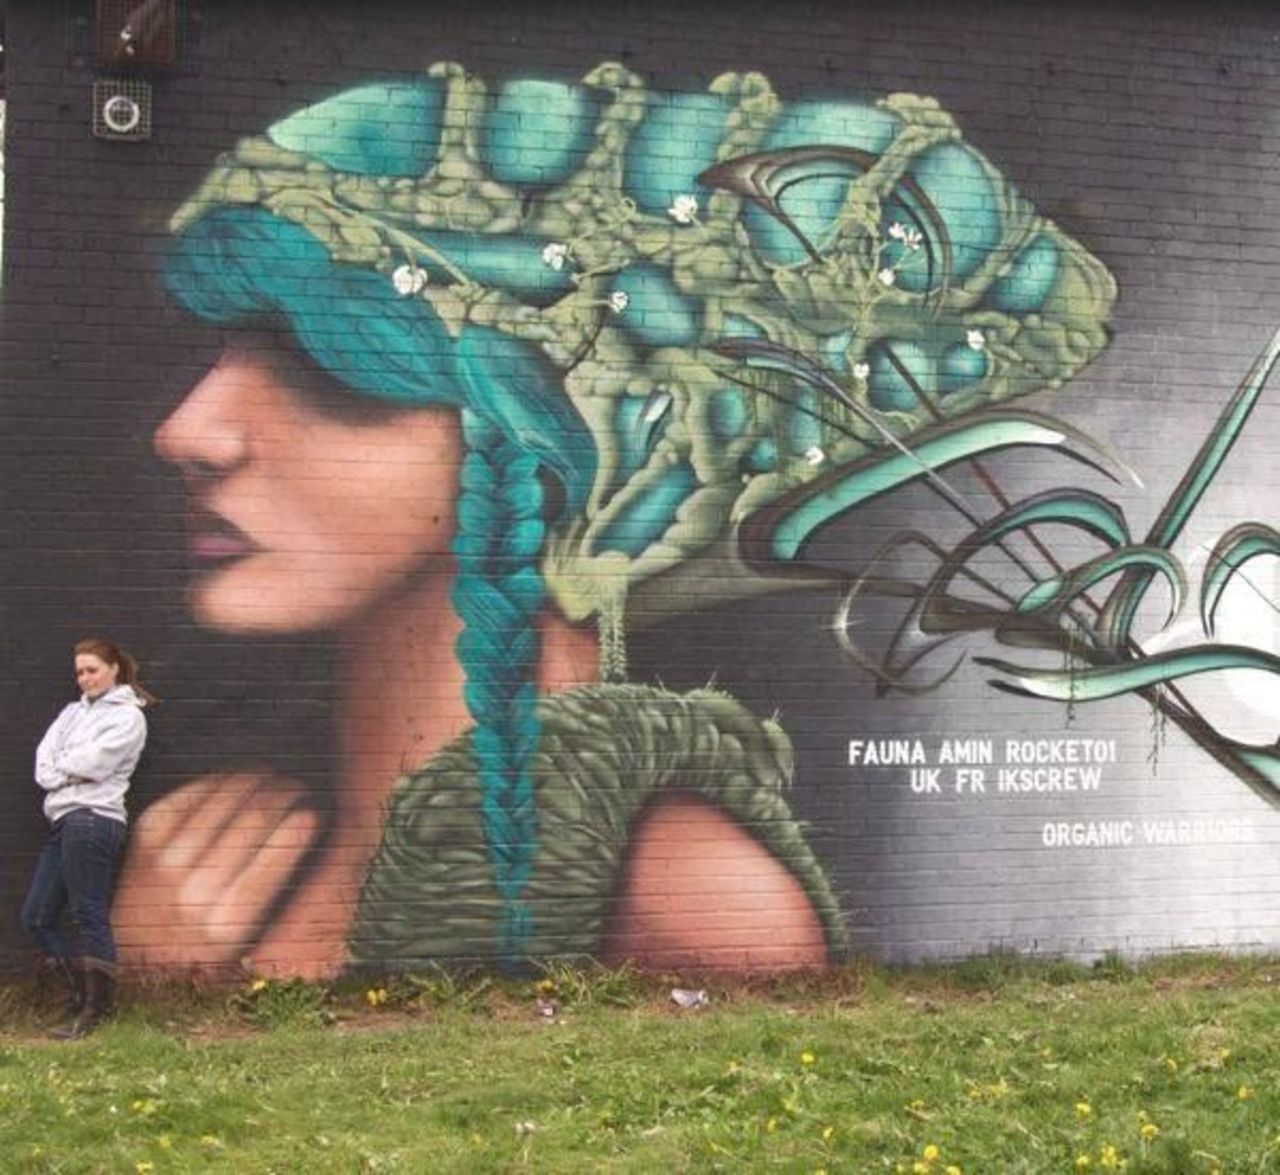 Faunagraphic #streetart #mural #graffiti #art https://t.co/xZsfOlc20k